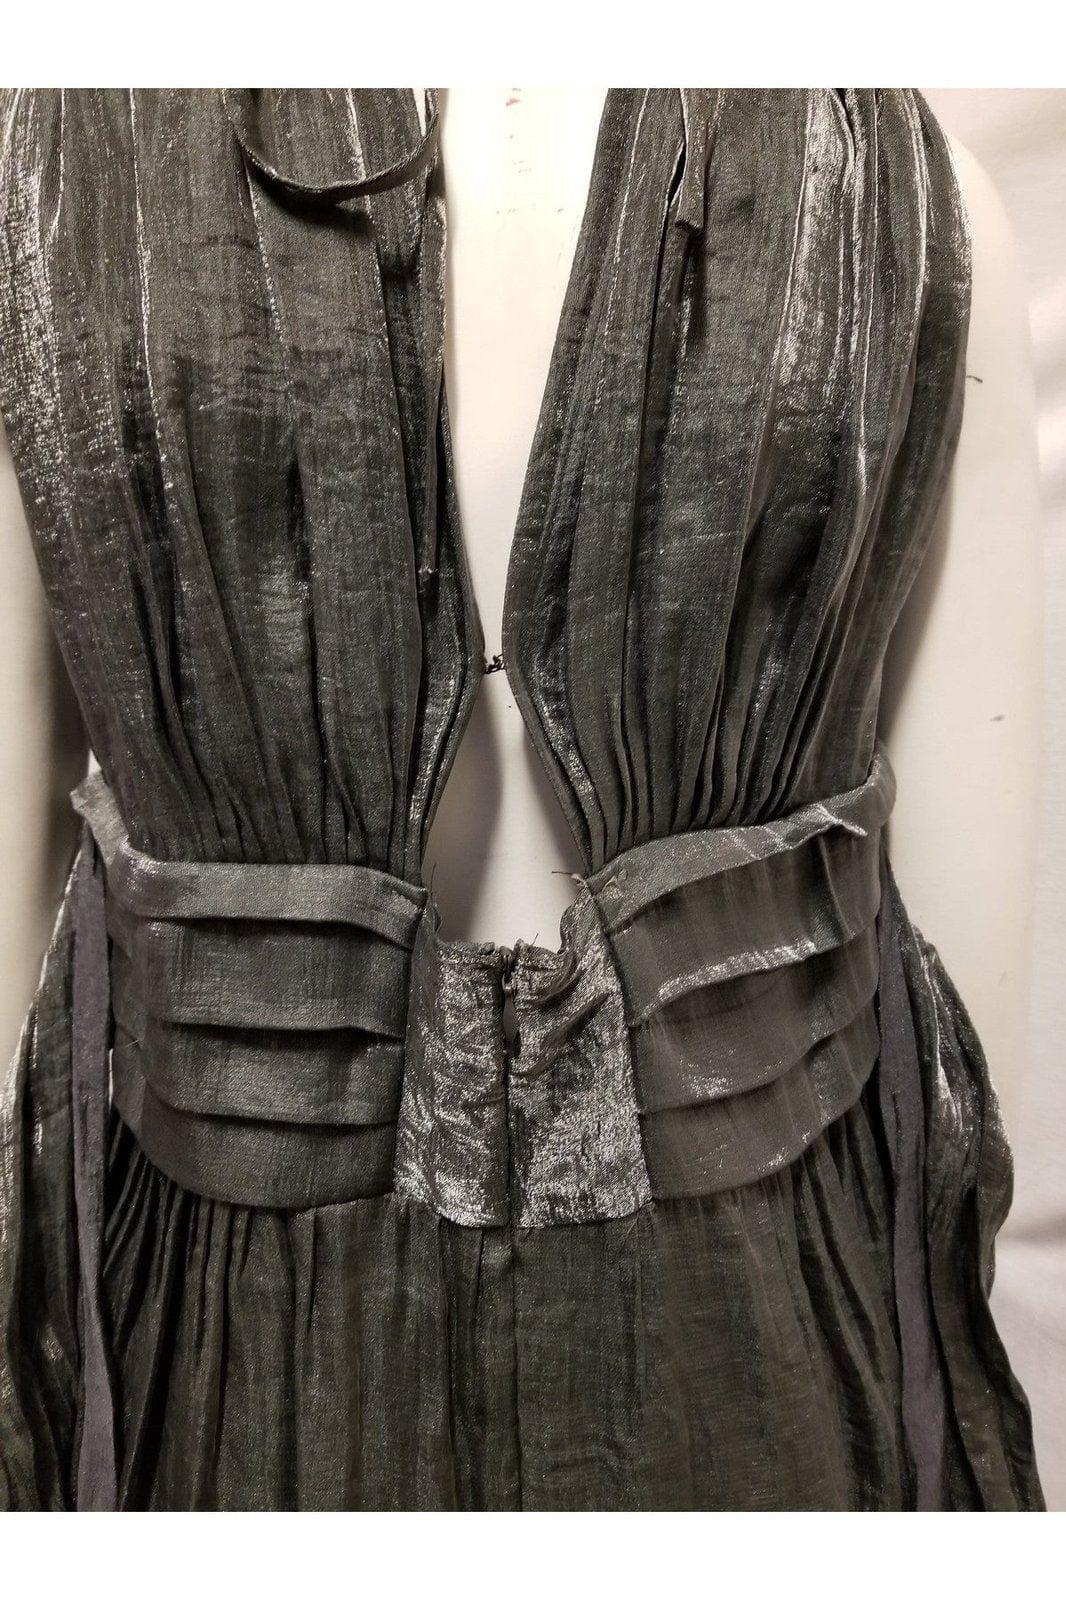 Adrianna Papell silver shimmer, sleeveless dress sz 8